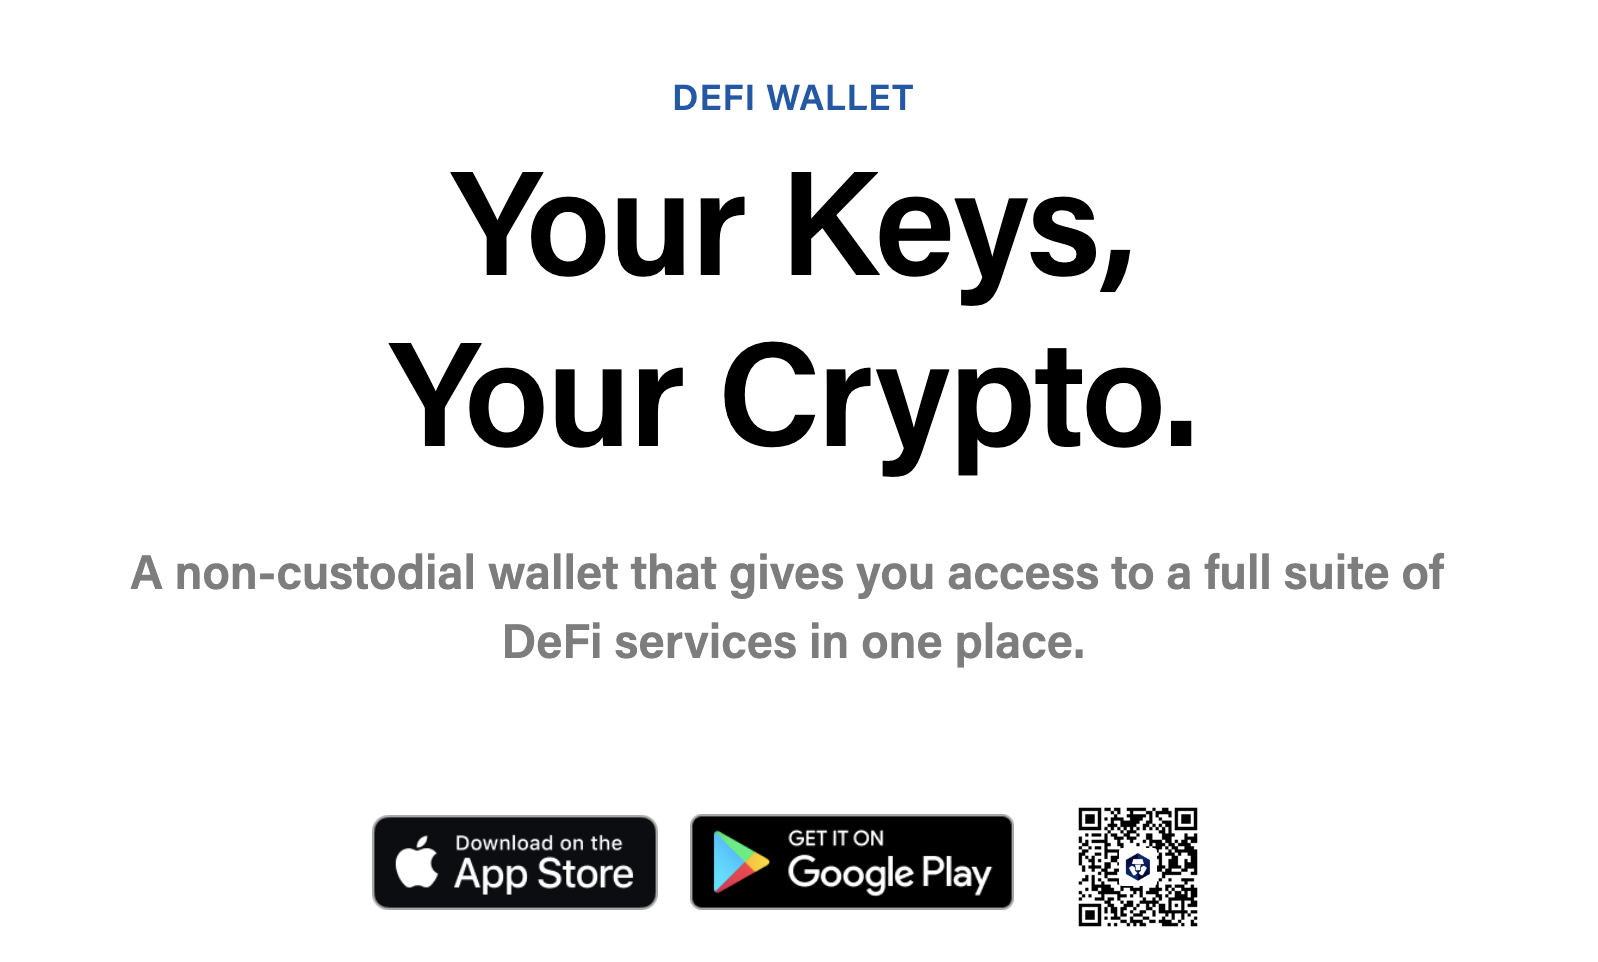 DeFi wallet mobile app